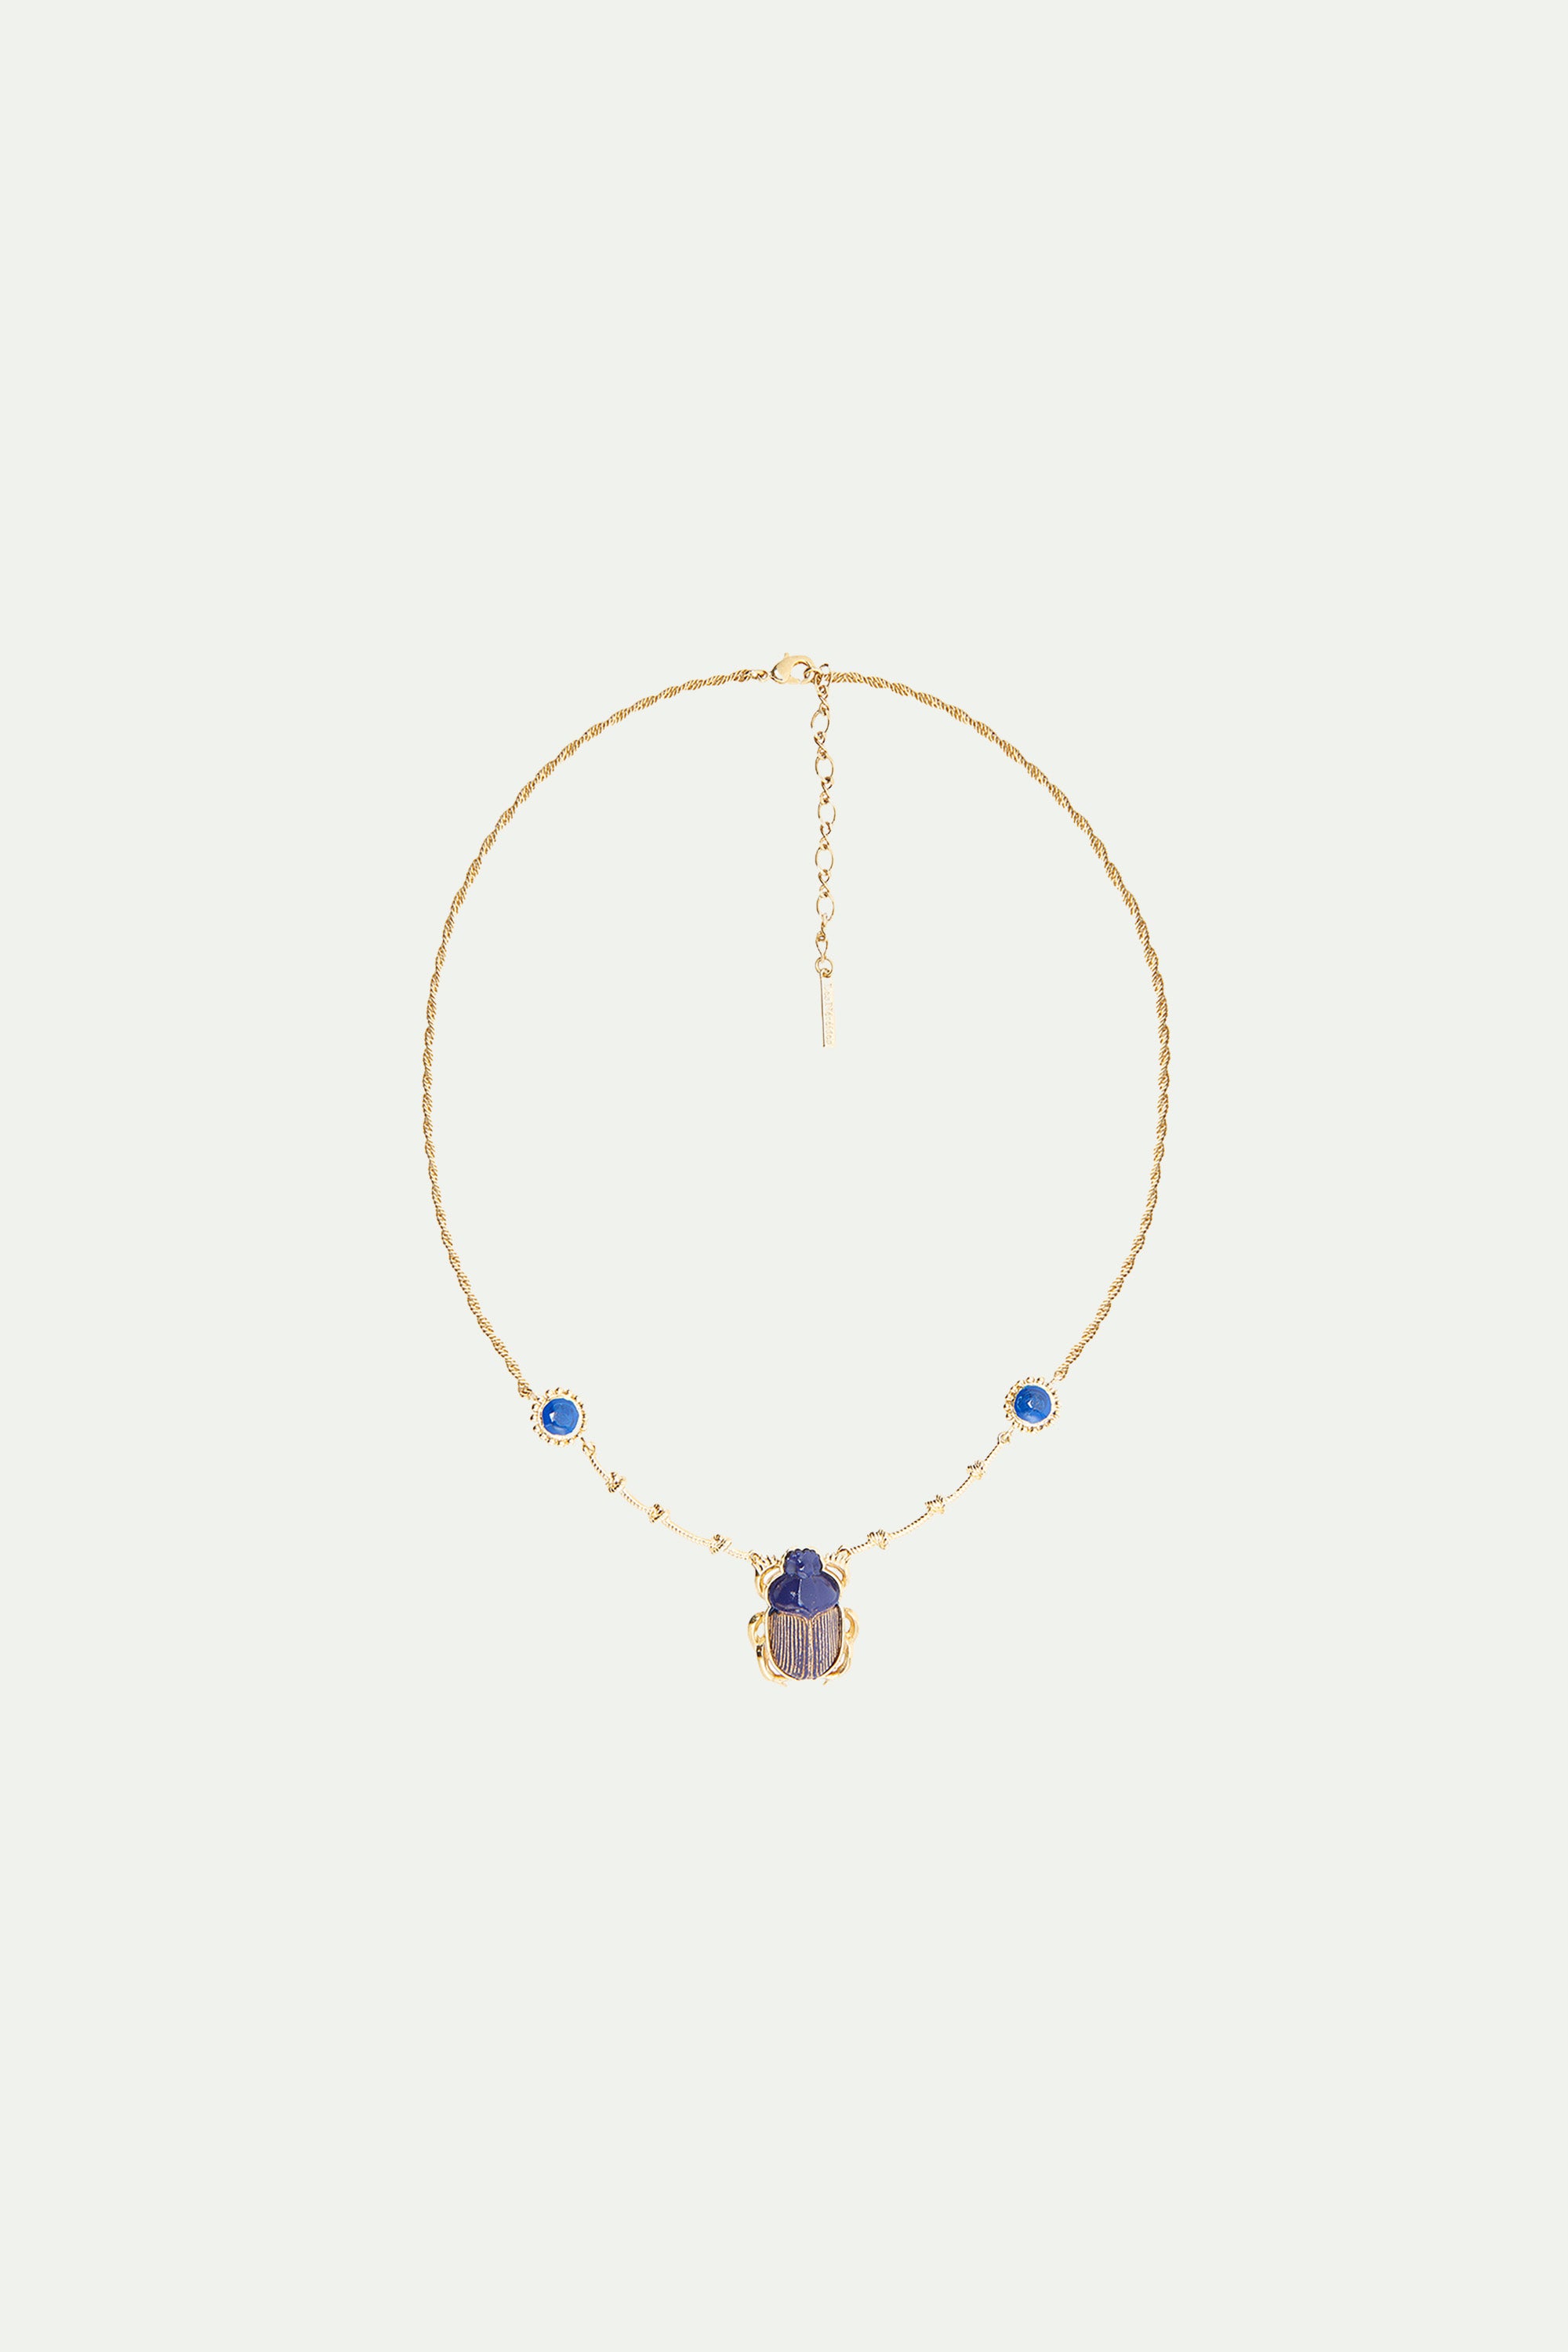 Sacred egyptian blue scarab beetle pendant necklace